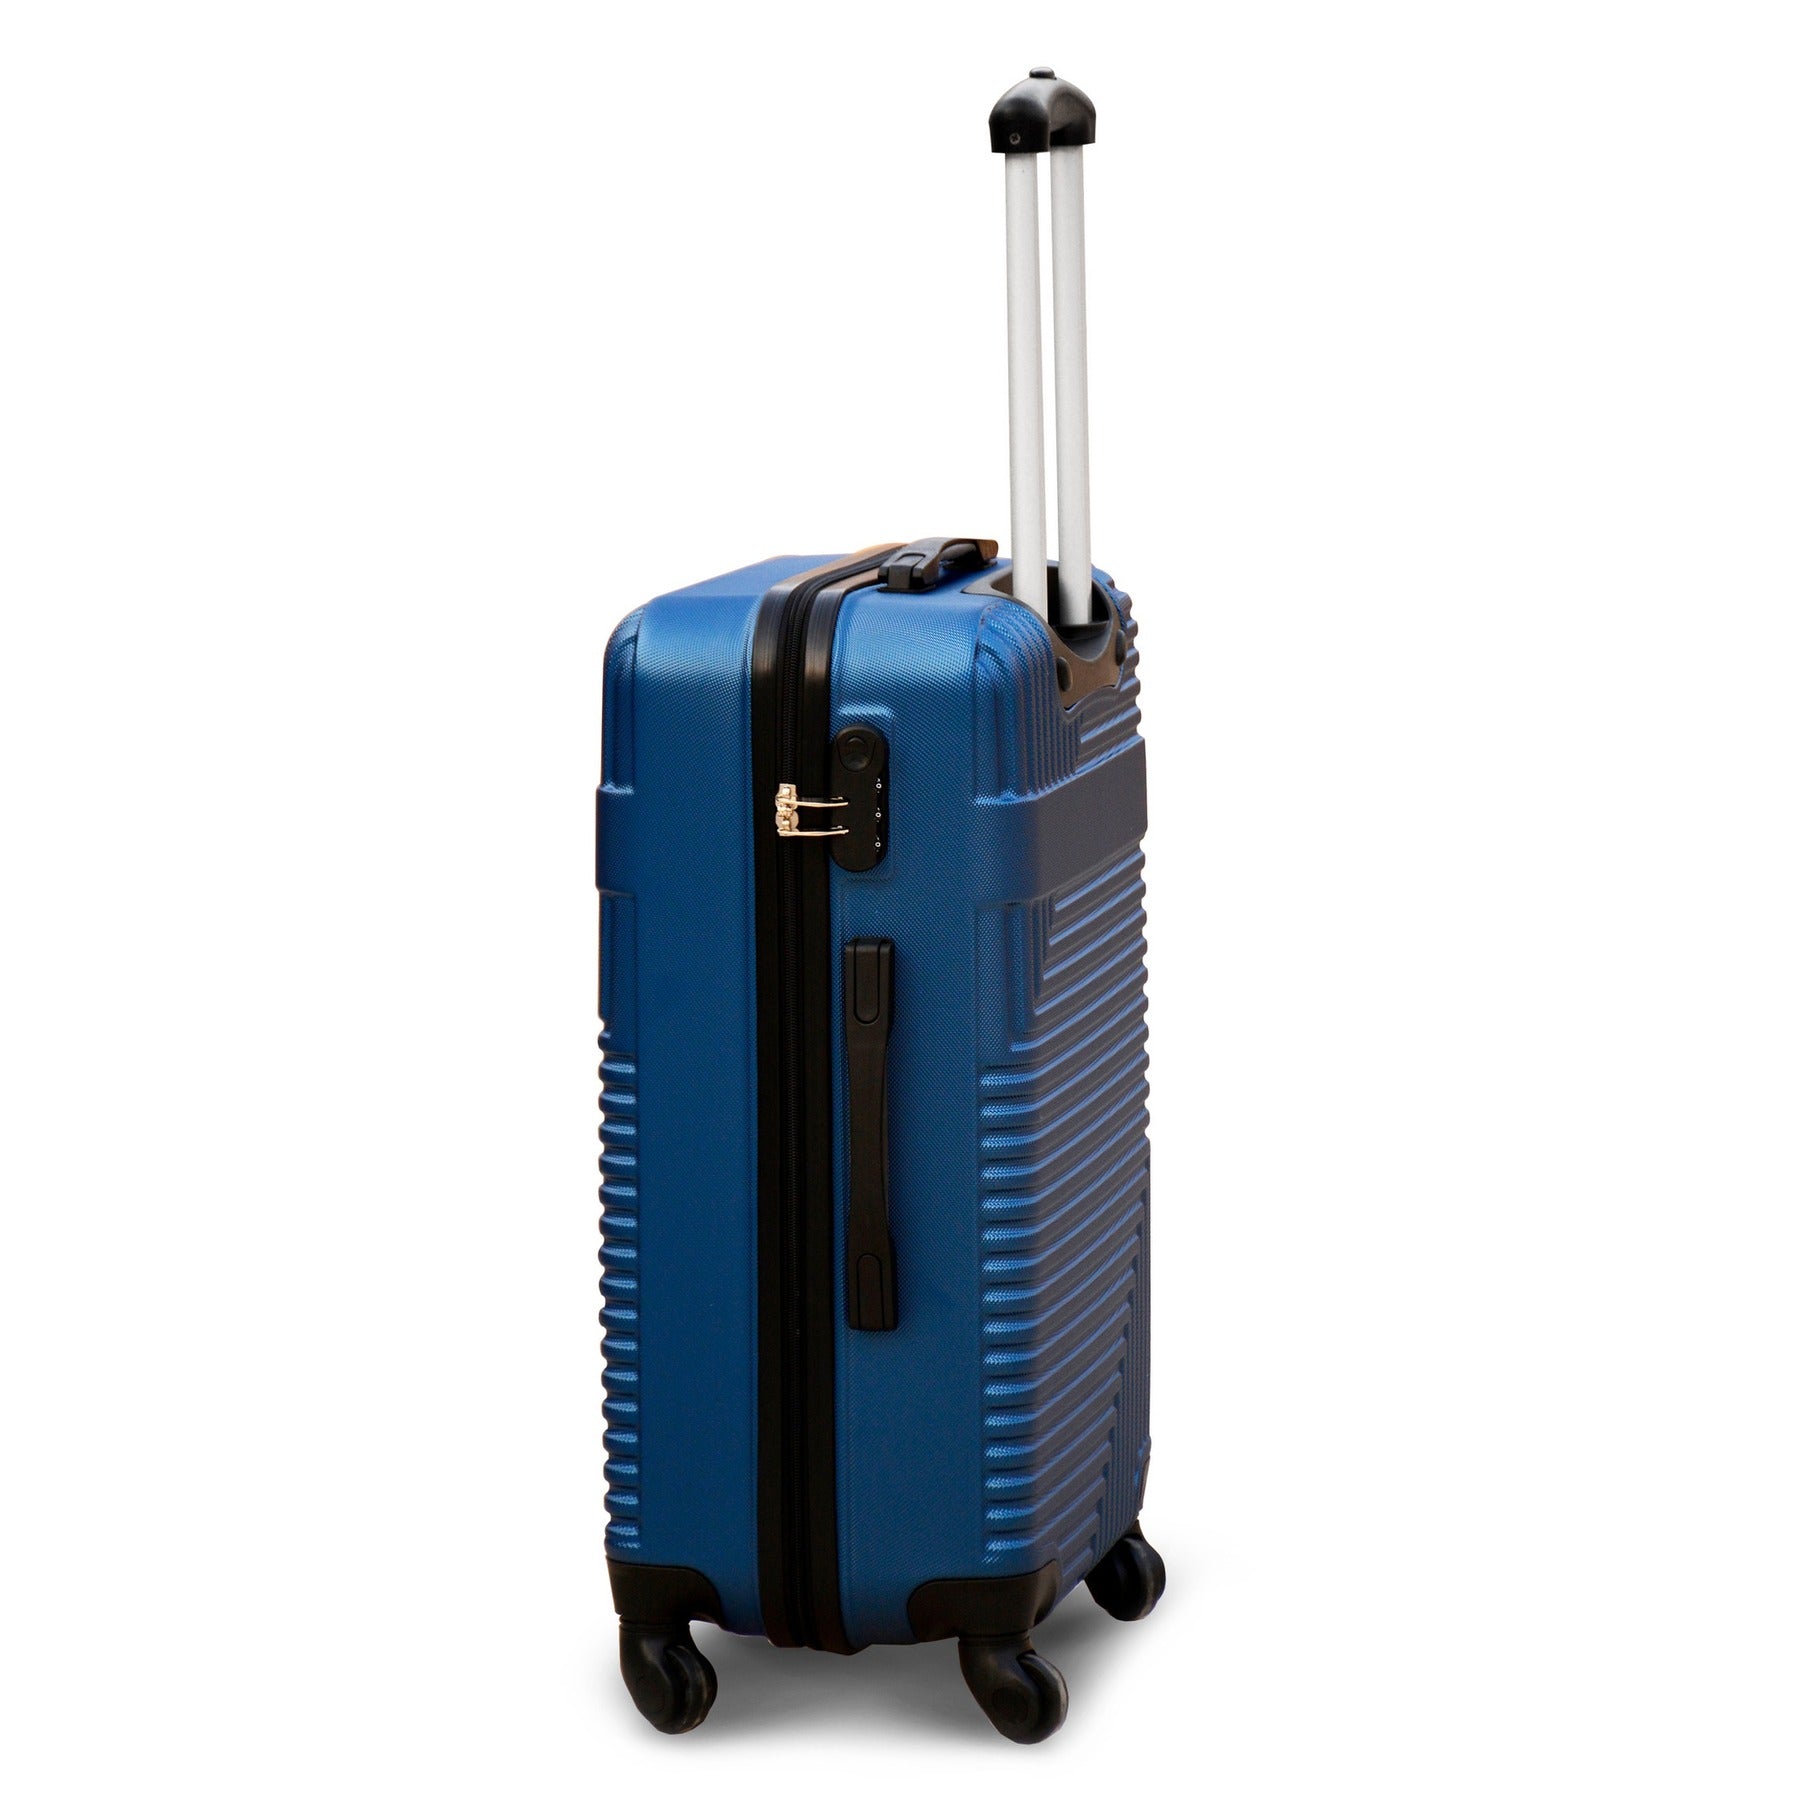 32" Blue Travel Way ABS Luggage Lightweight Hard Case Trolley Big Size Bag